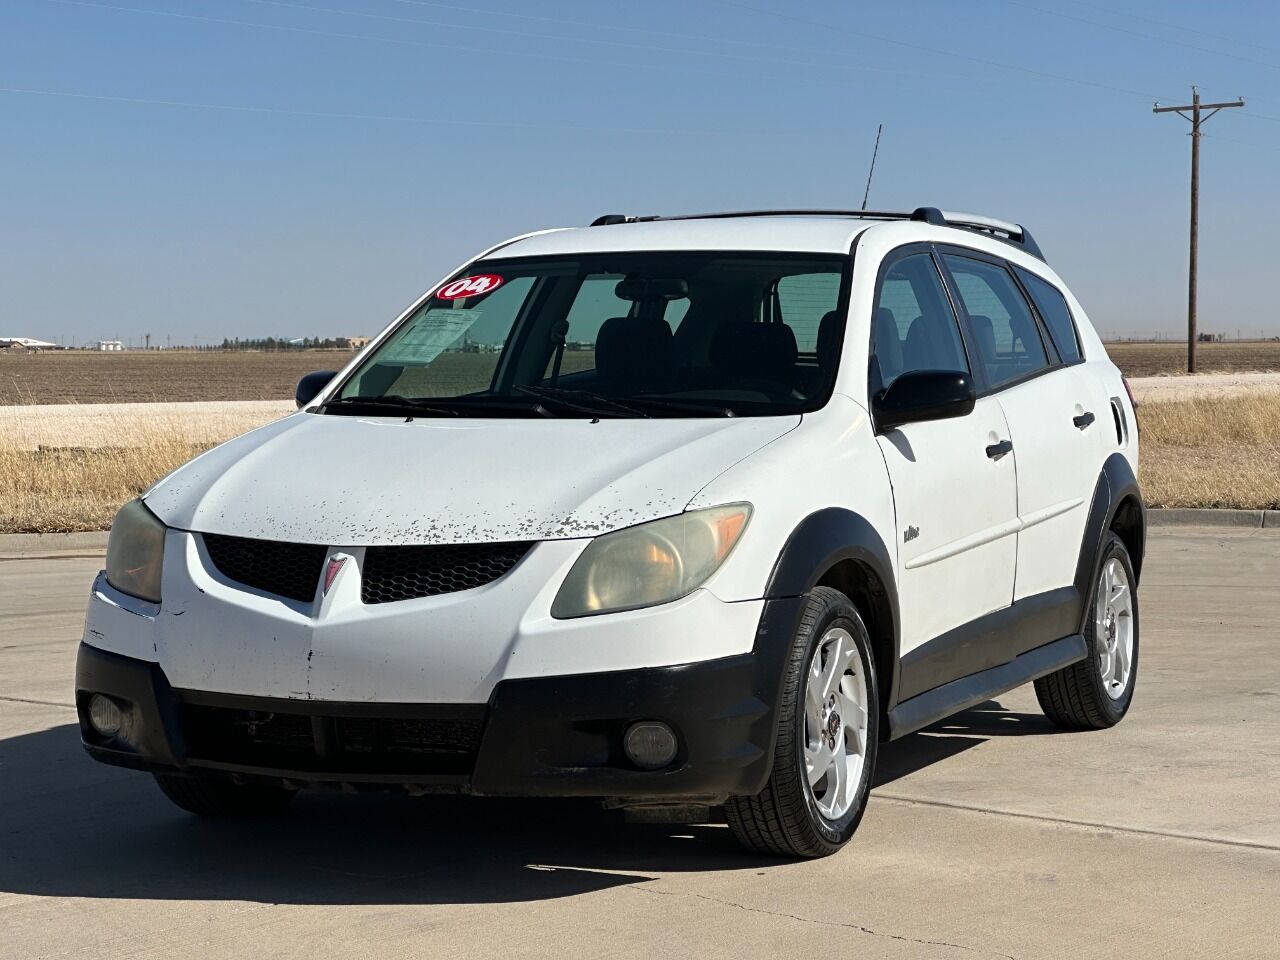 Pontiac Vibe For Sale In Texas - Carsforsale.com®